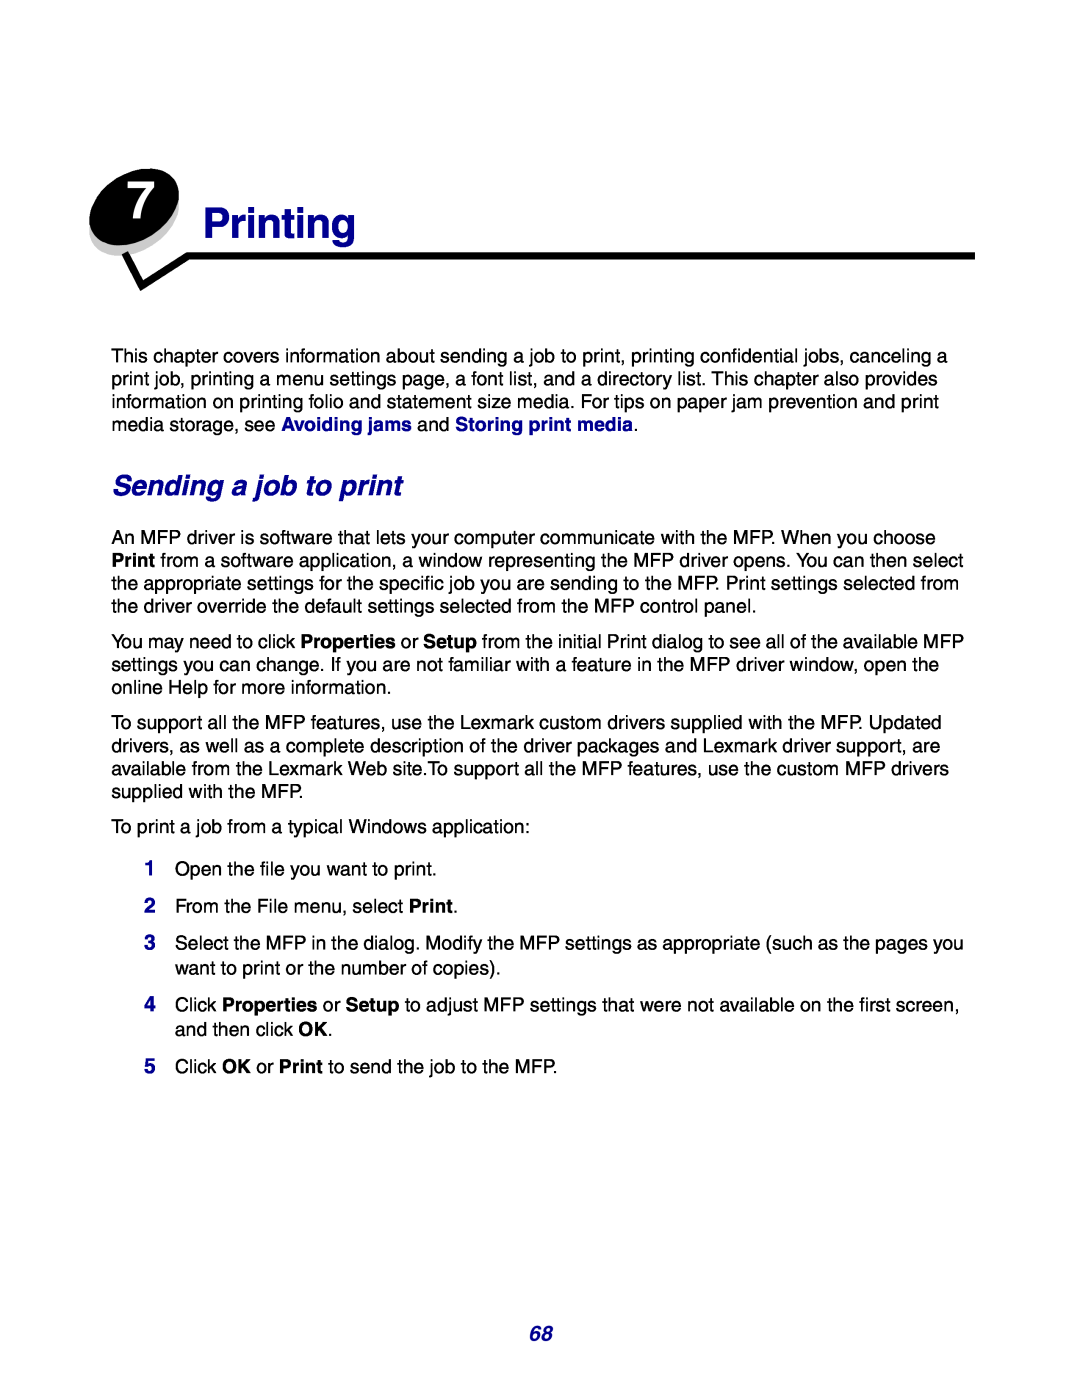 Lexmark X642e manual Printing, Sending a job to print 